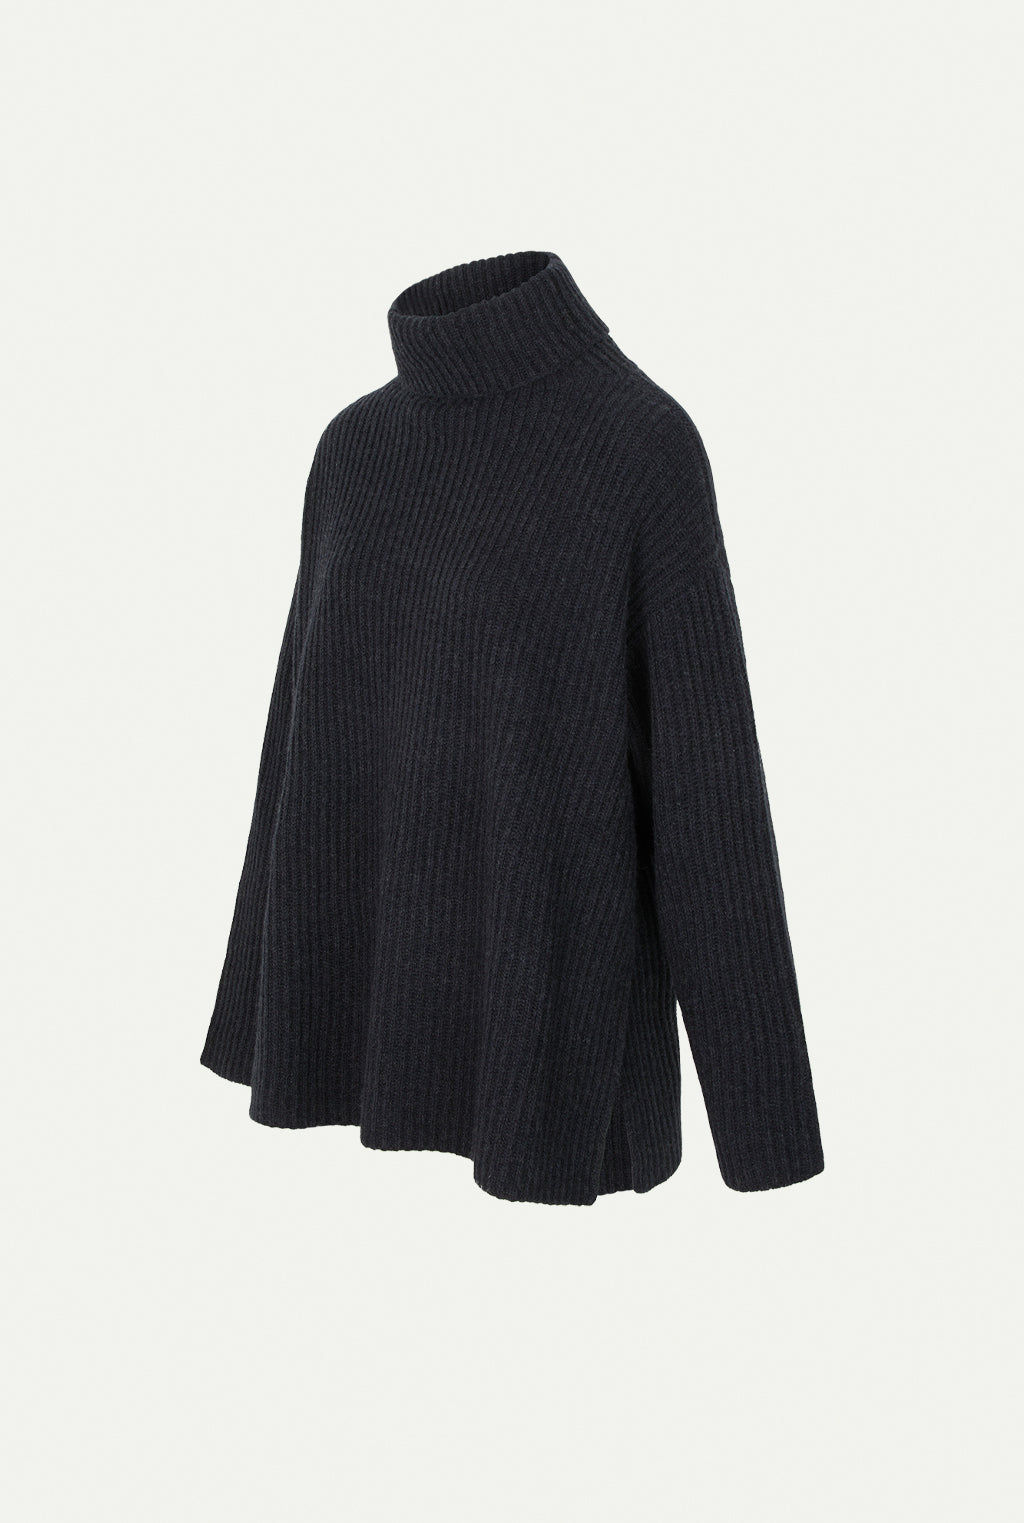 LISBON cashmere sweater